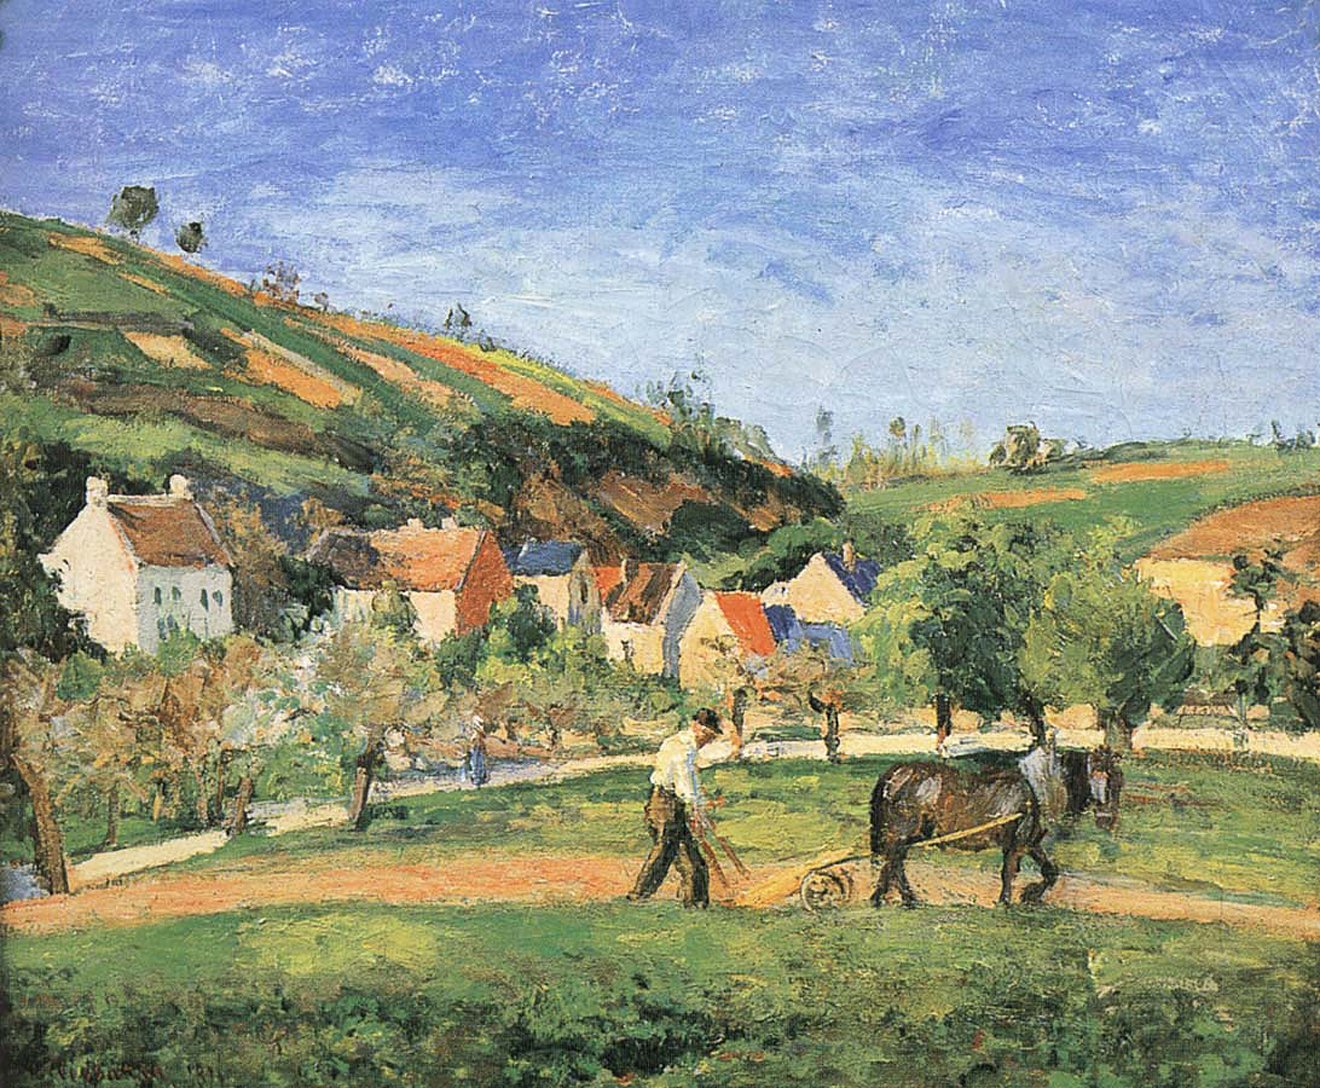 Camille+Pissarro-1830-1903 (273).jpg